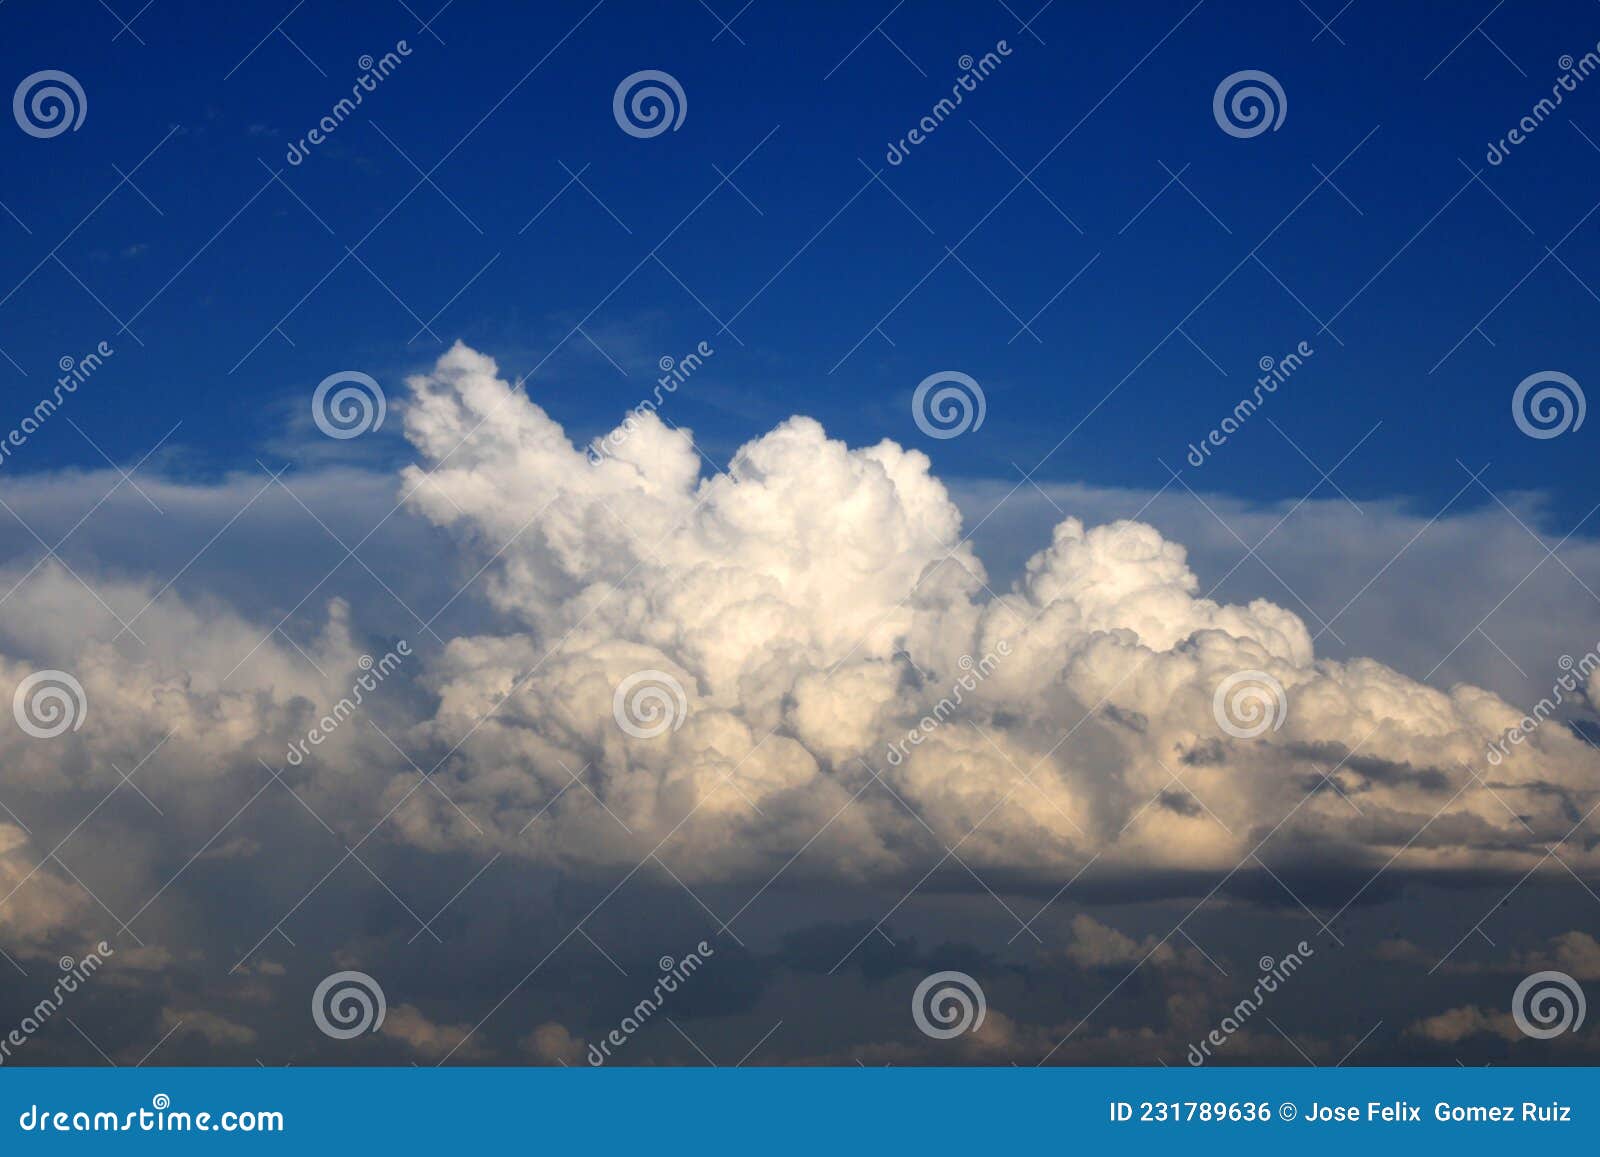 compact clouds over a dark blue sky